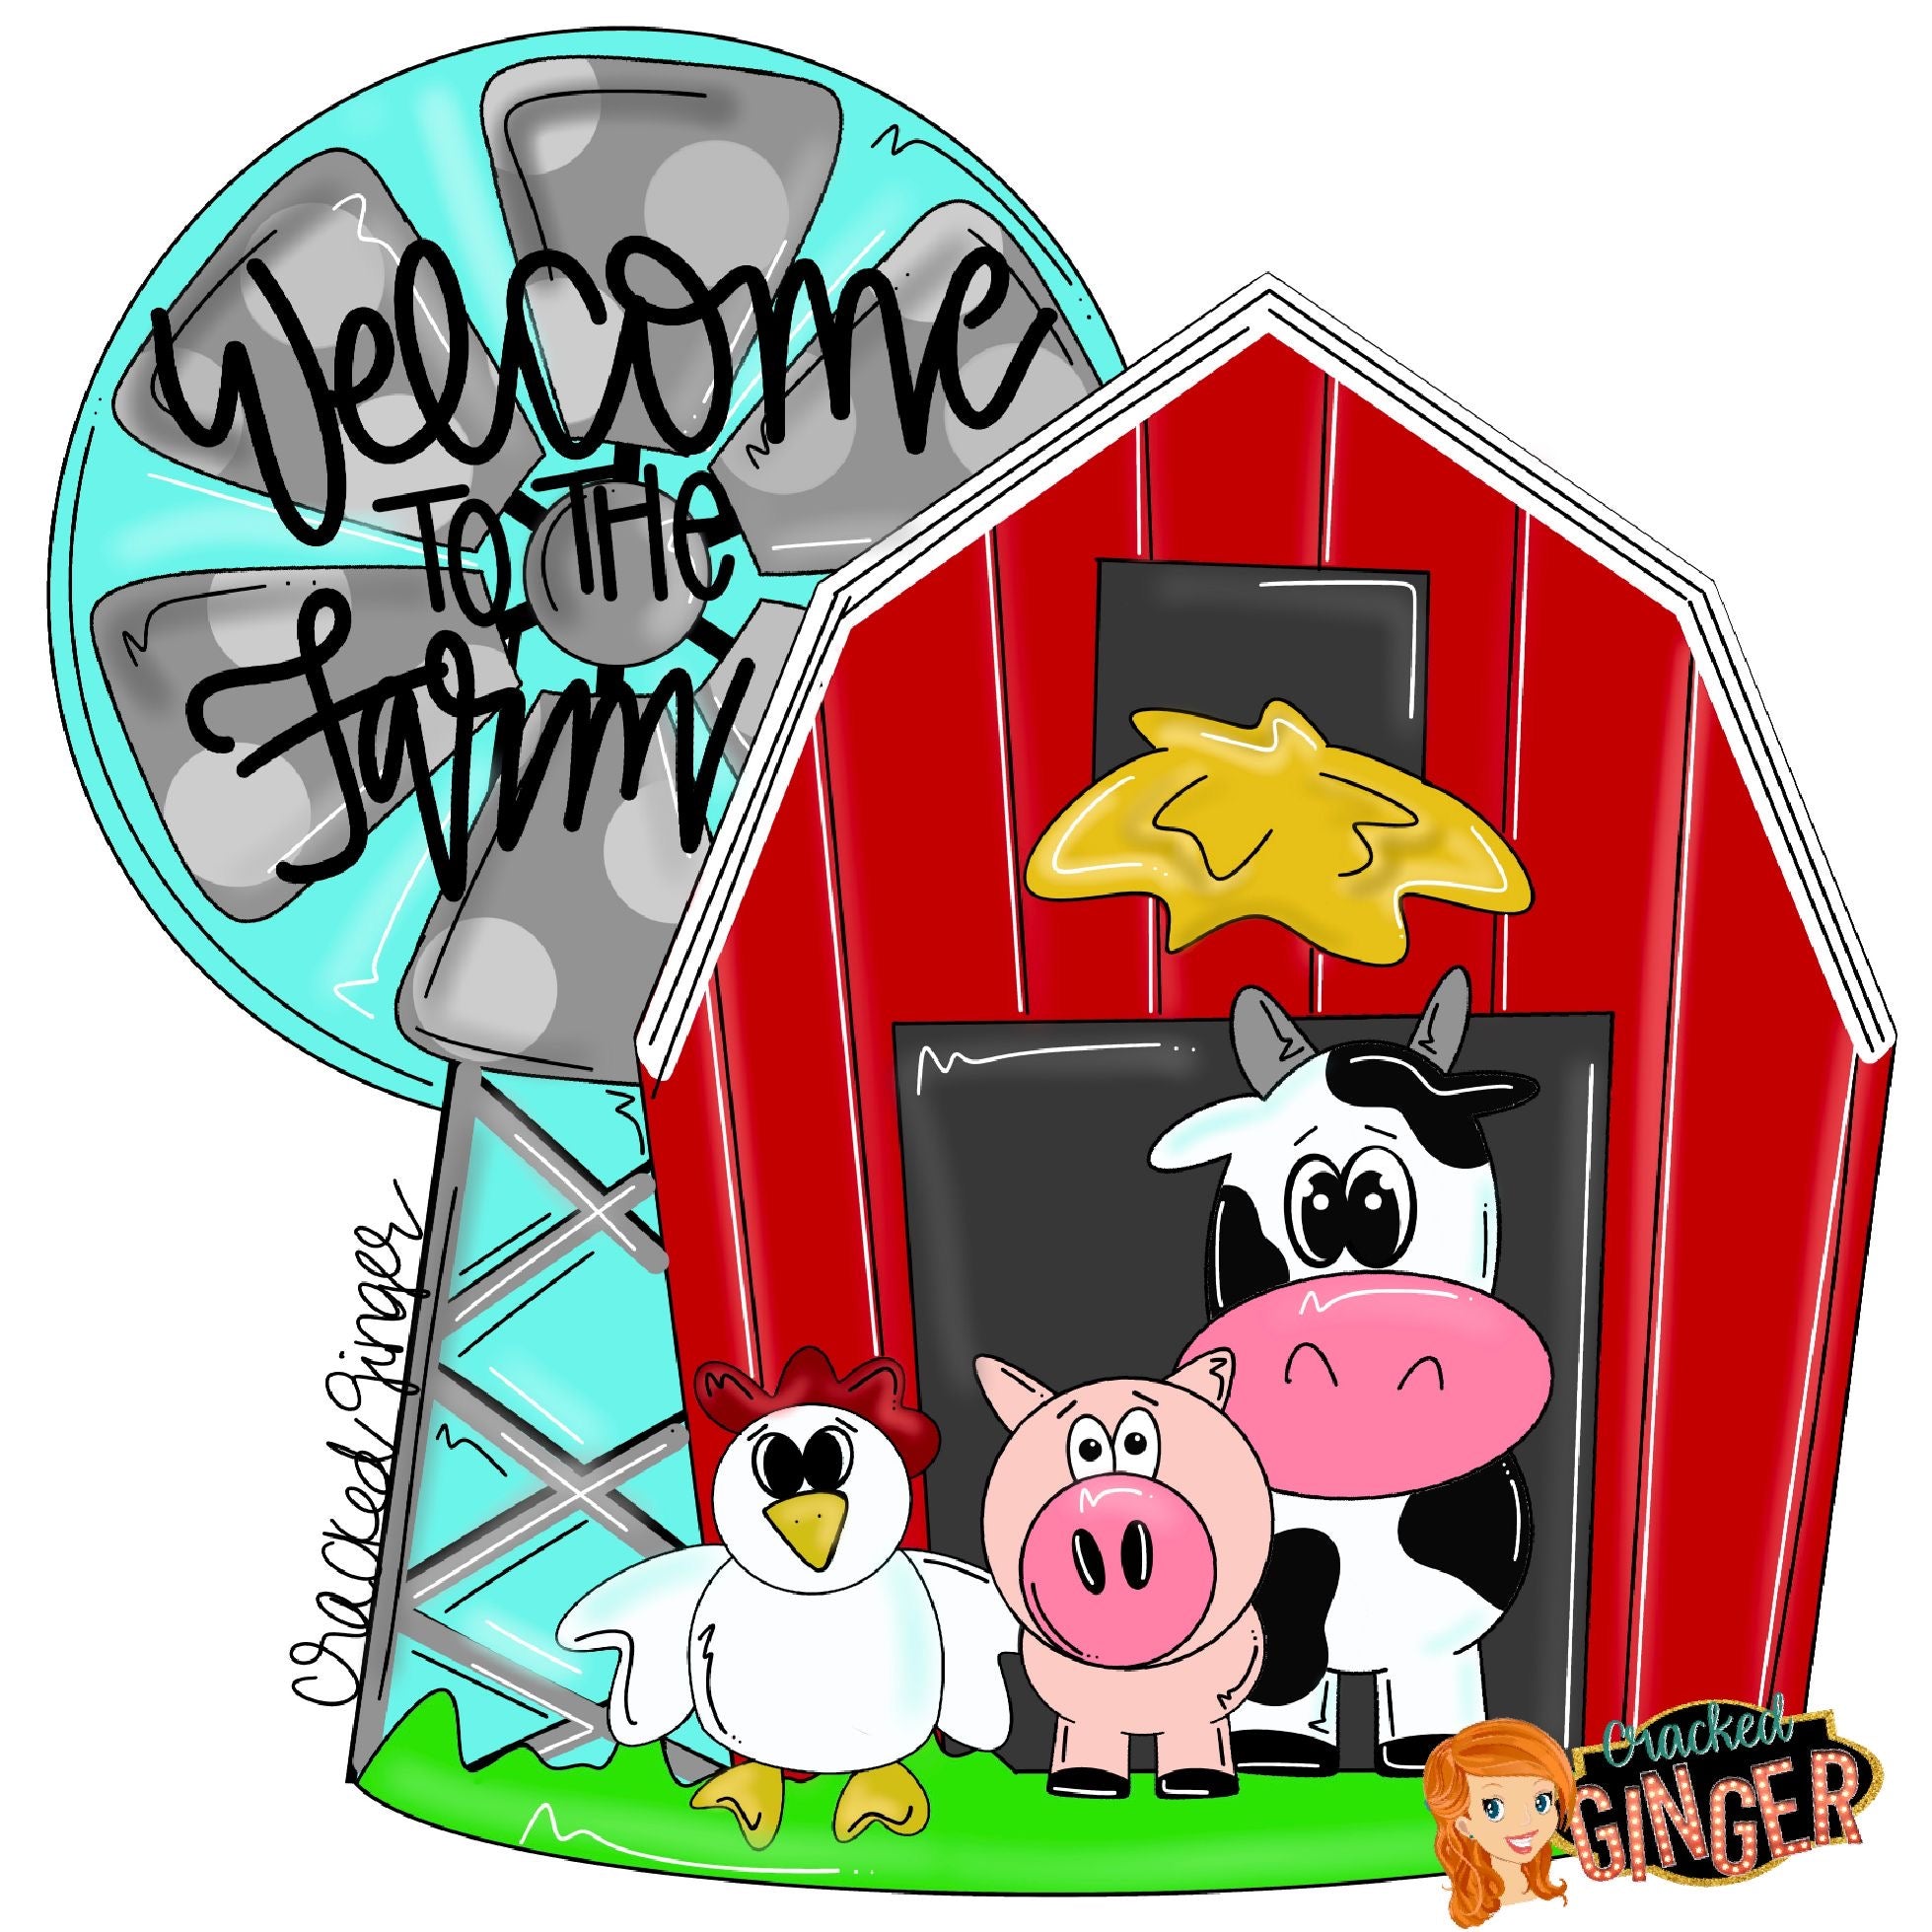 farm barn and animals